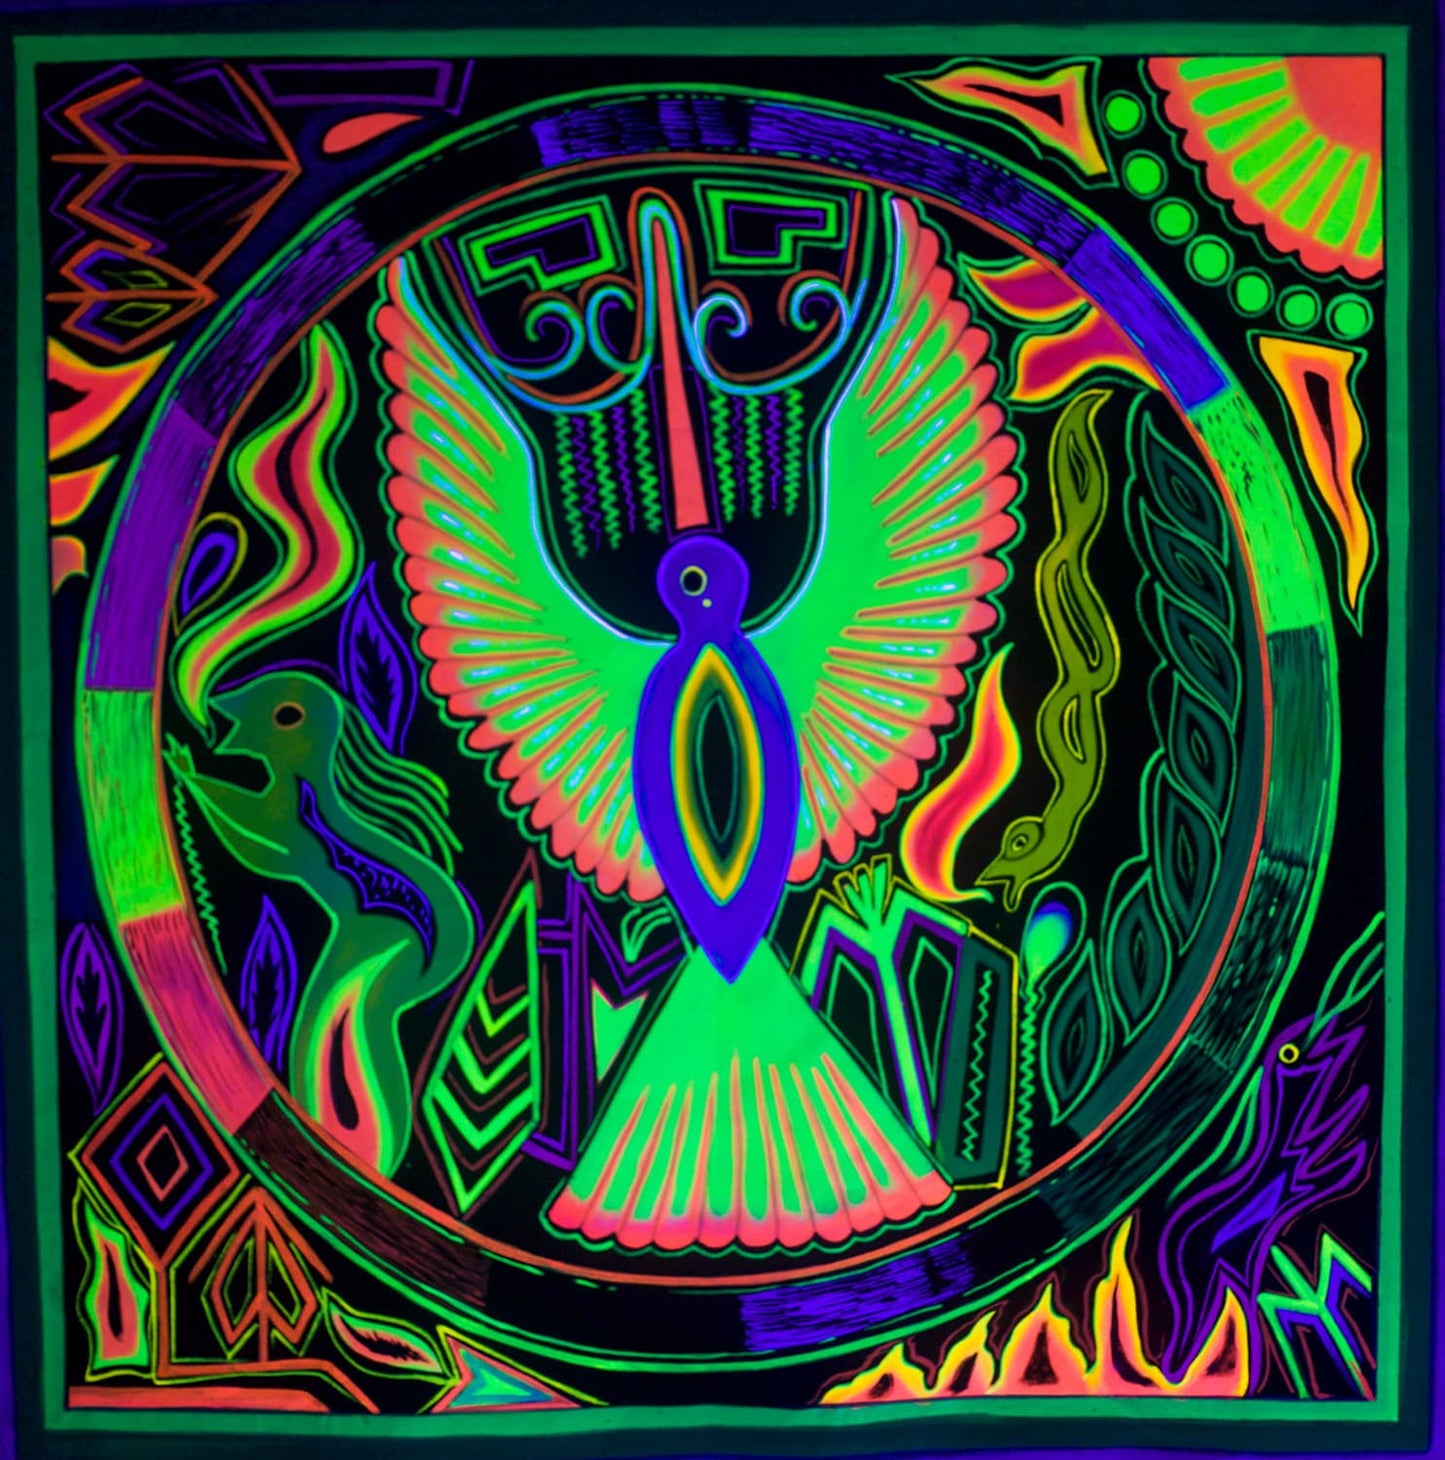 Huichol Peyote Eagle UV Painting - 100x100cm - fully blacklight glowing colors - huichol mescaline spirit artwork